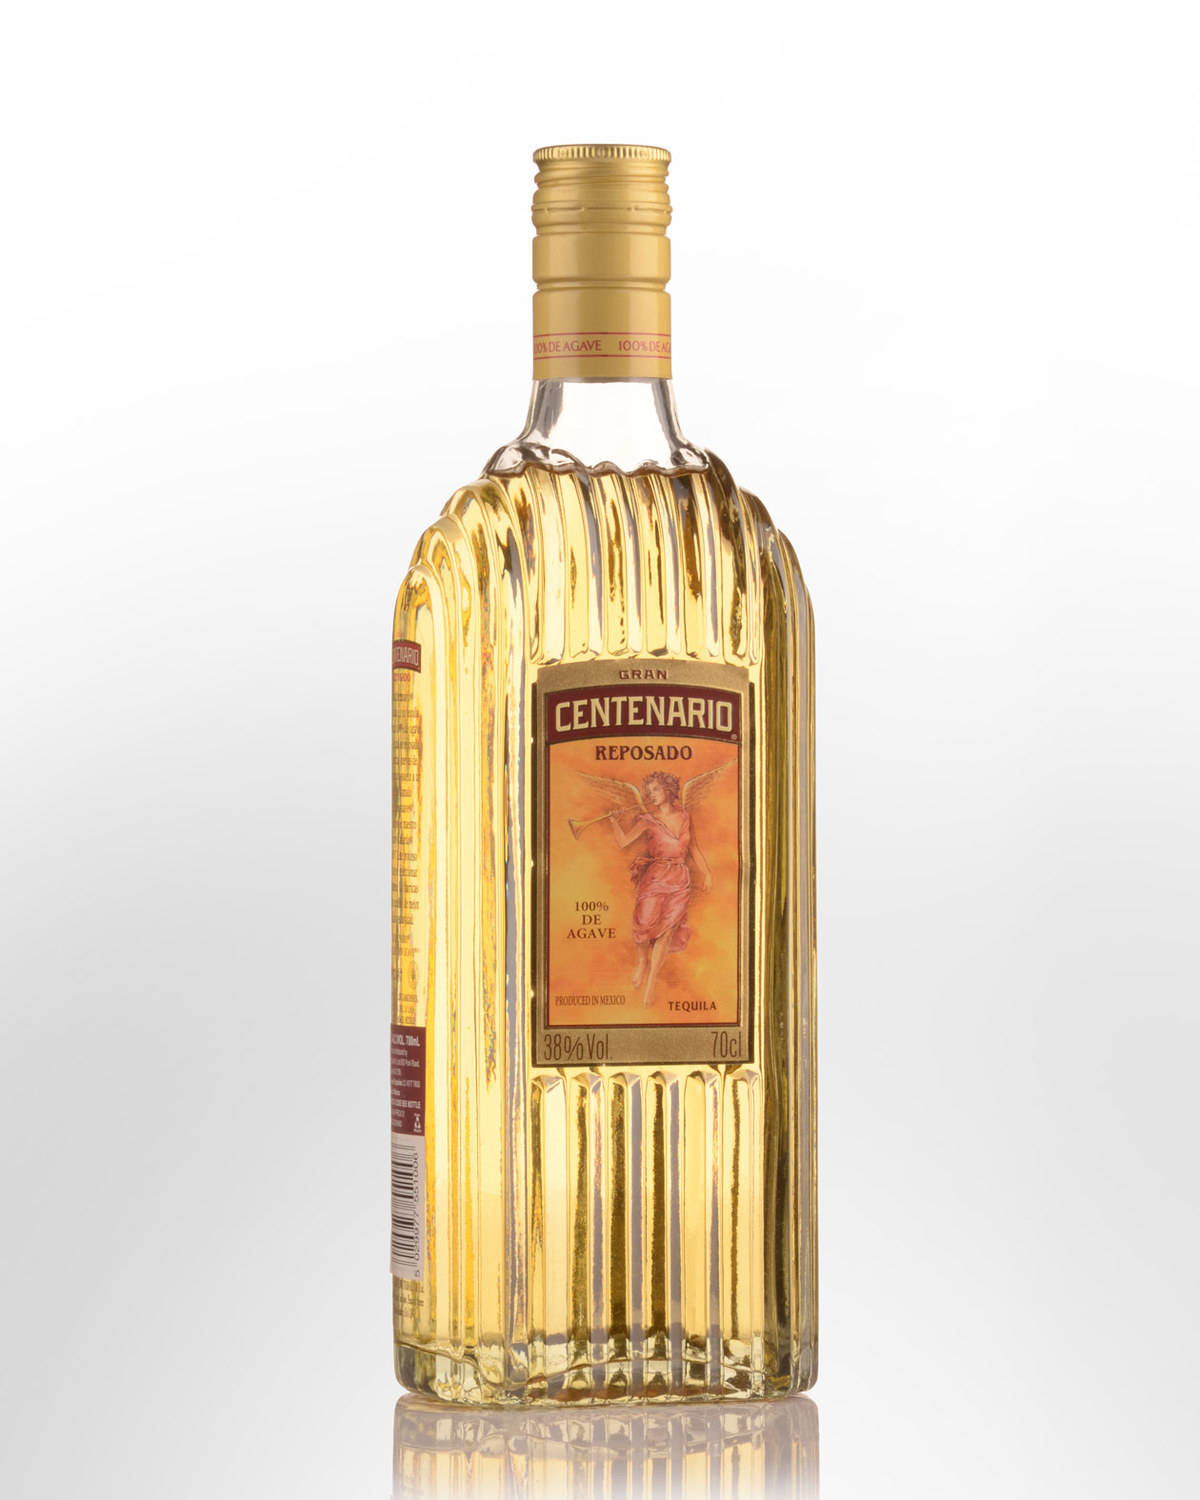 Gran Centenario Tequila Reposado in its Signature Bottle Wallpaper